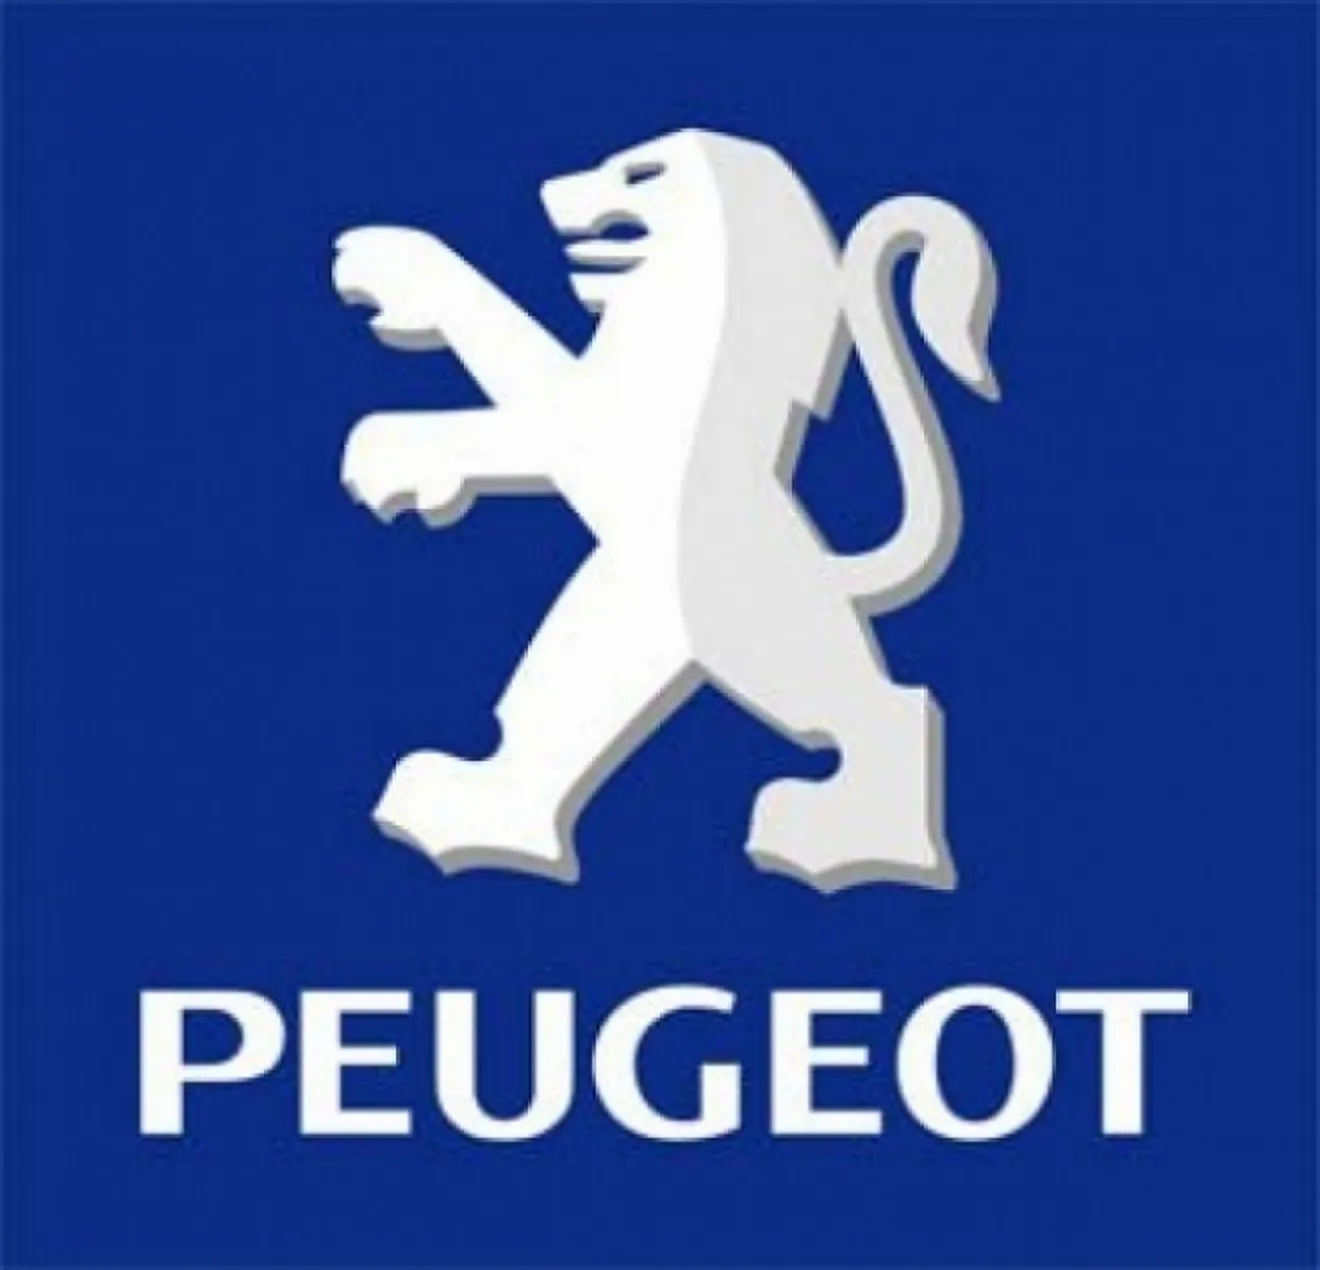 Ofertas Peugeot: Cheques descuento por aniversario